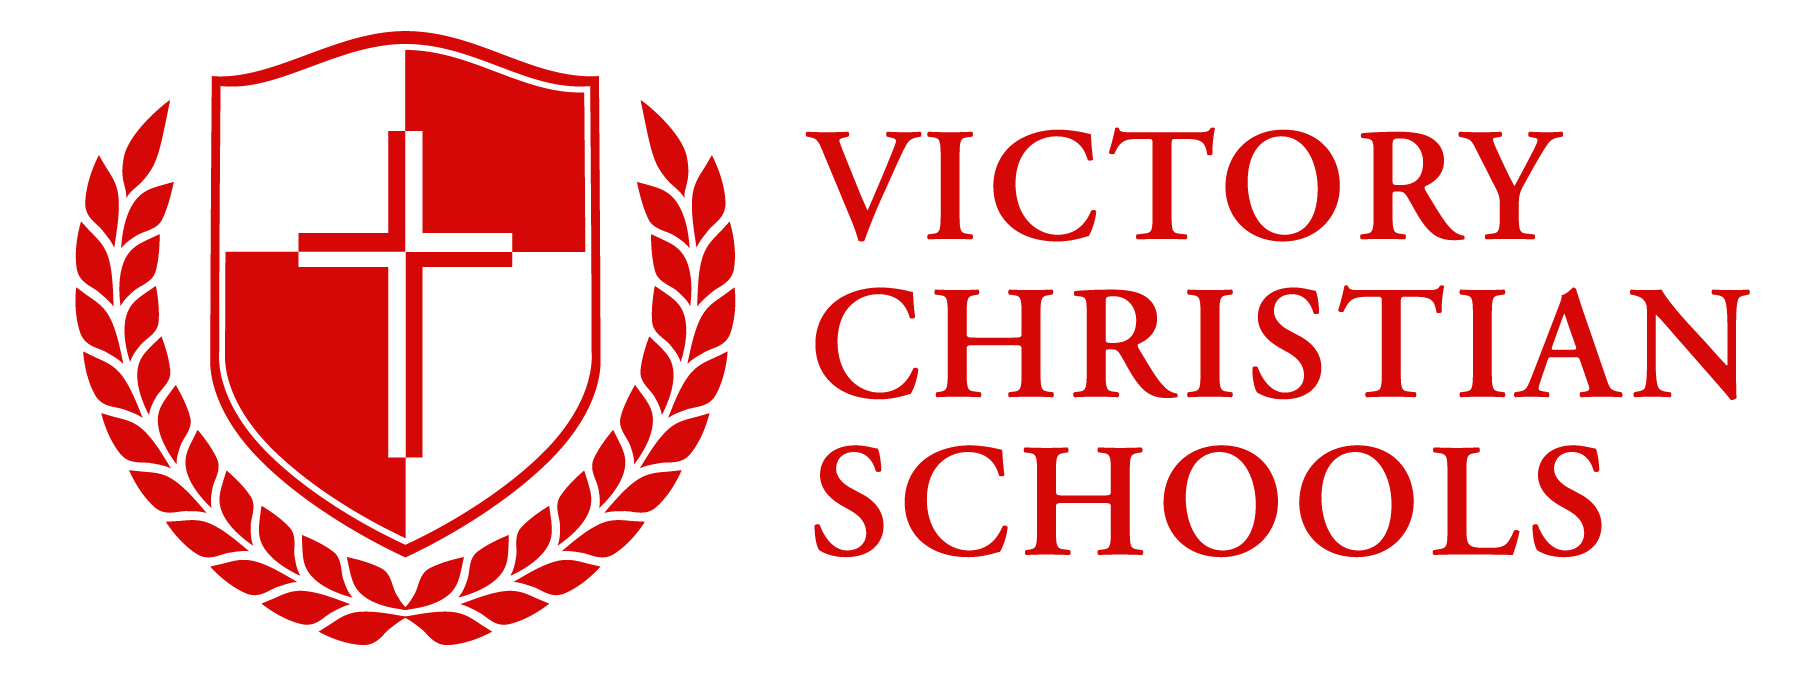 Victory Christian Schools